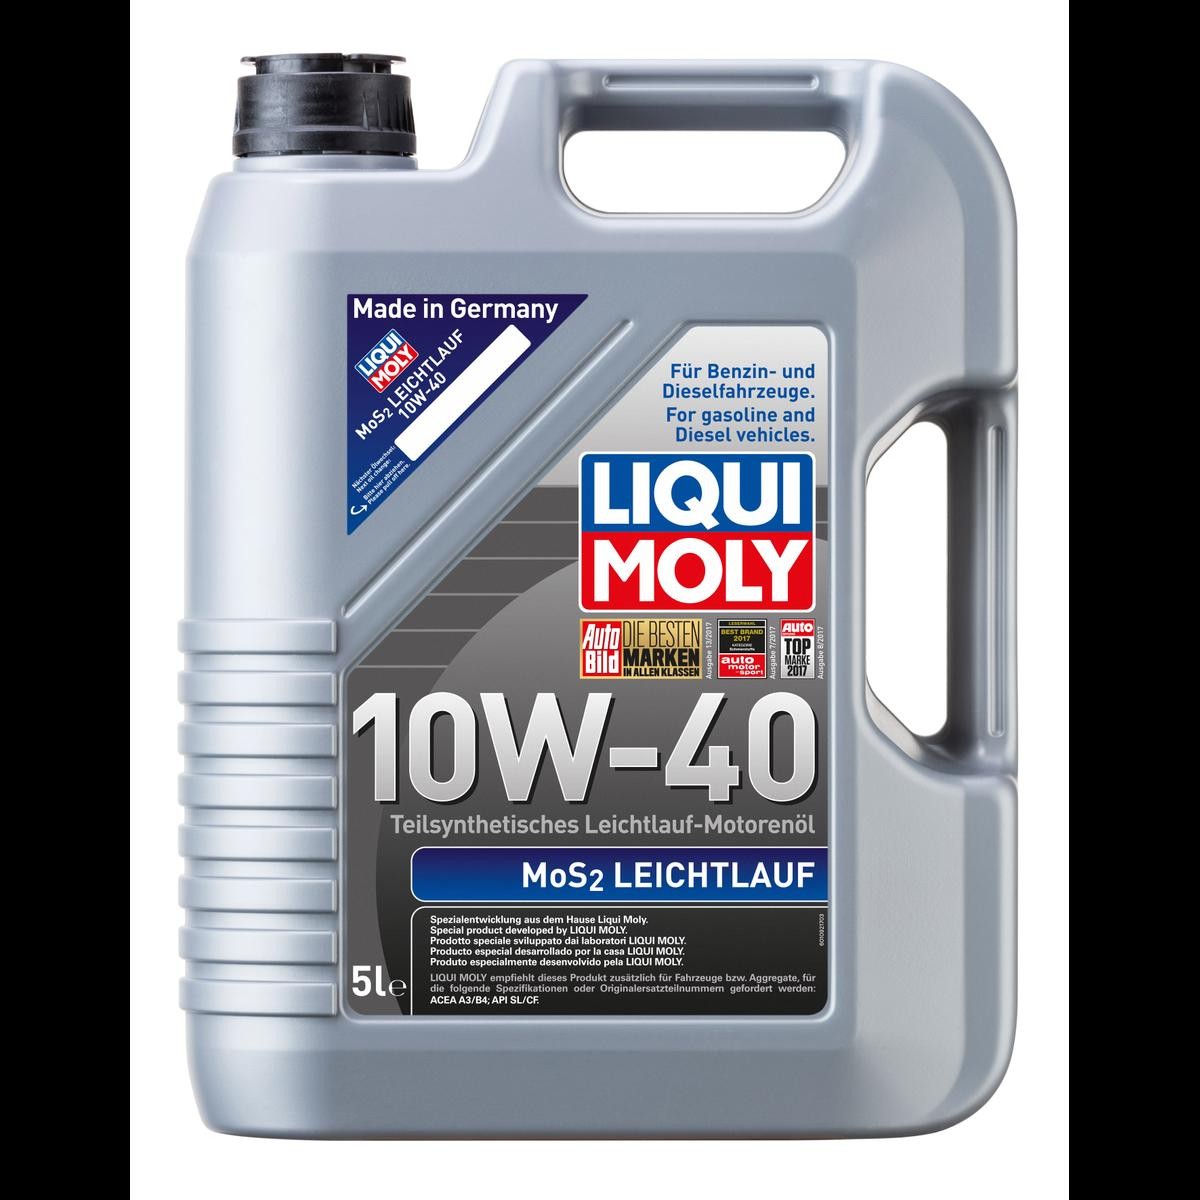 LIQUI MOLY МoS2 Leichtlauf 1092 Original PEUGEOT Motoröl kaufen